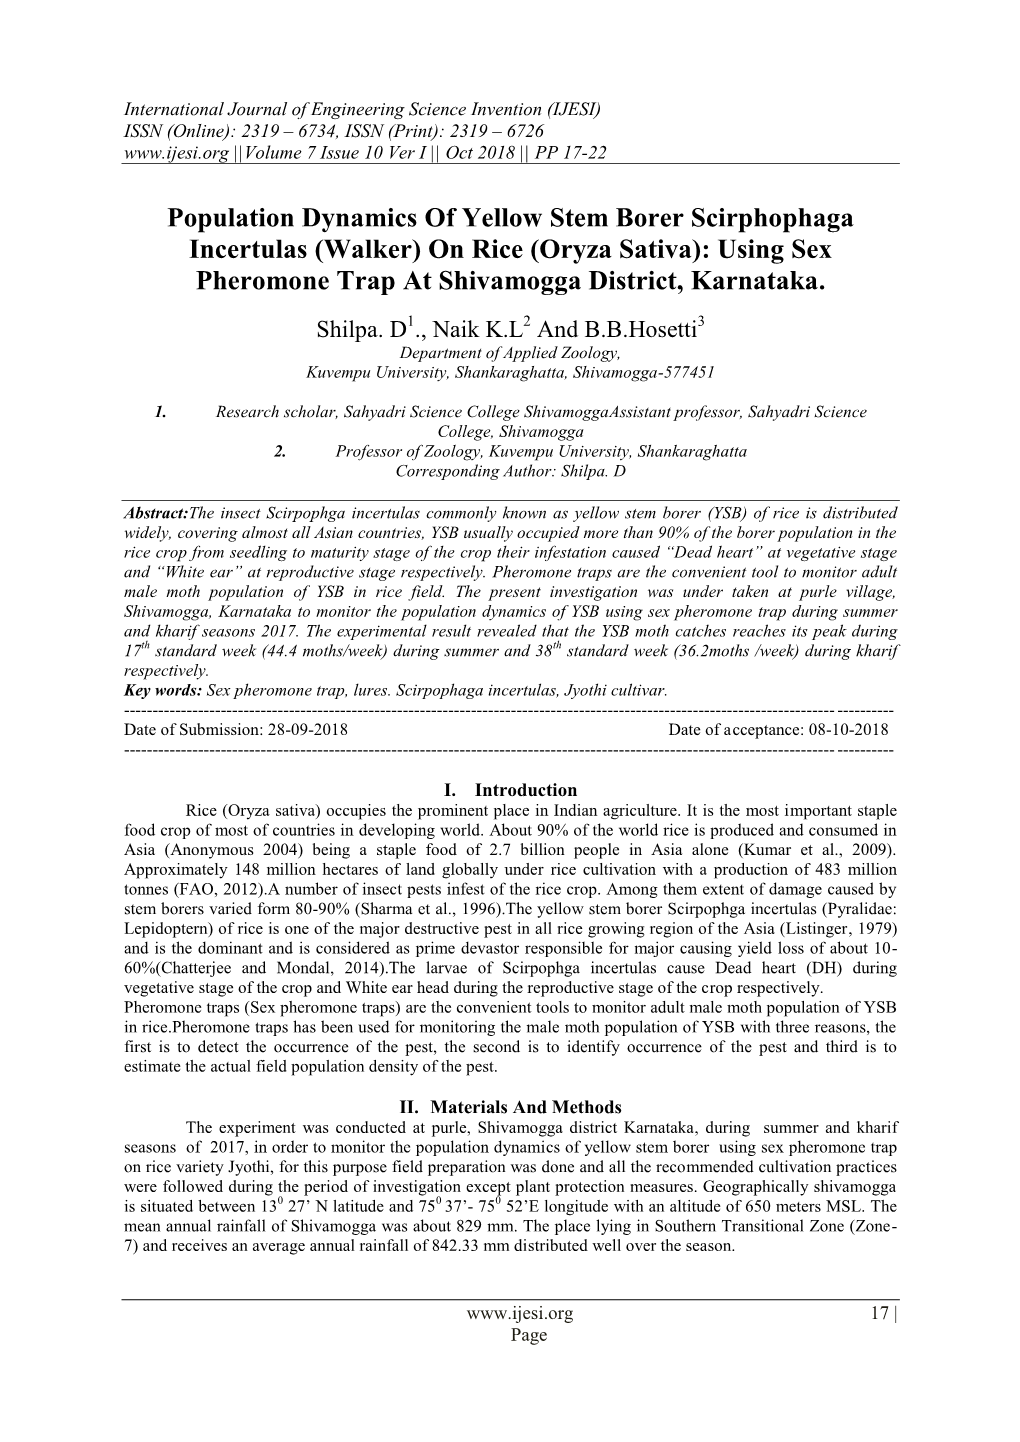 Population Dynamics of Yellow Stem Borer Scirphophaga Incertulas (Walker) on Rice (Oryza Sativa): Using Sex Pheromone Trap at Shivamogga District, Karnataka